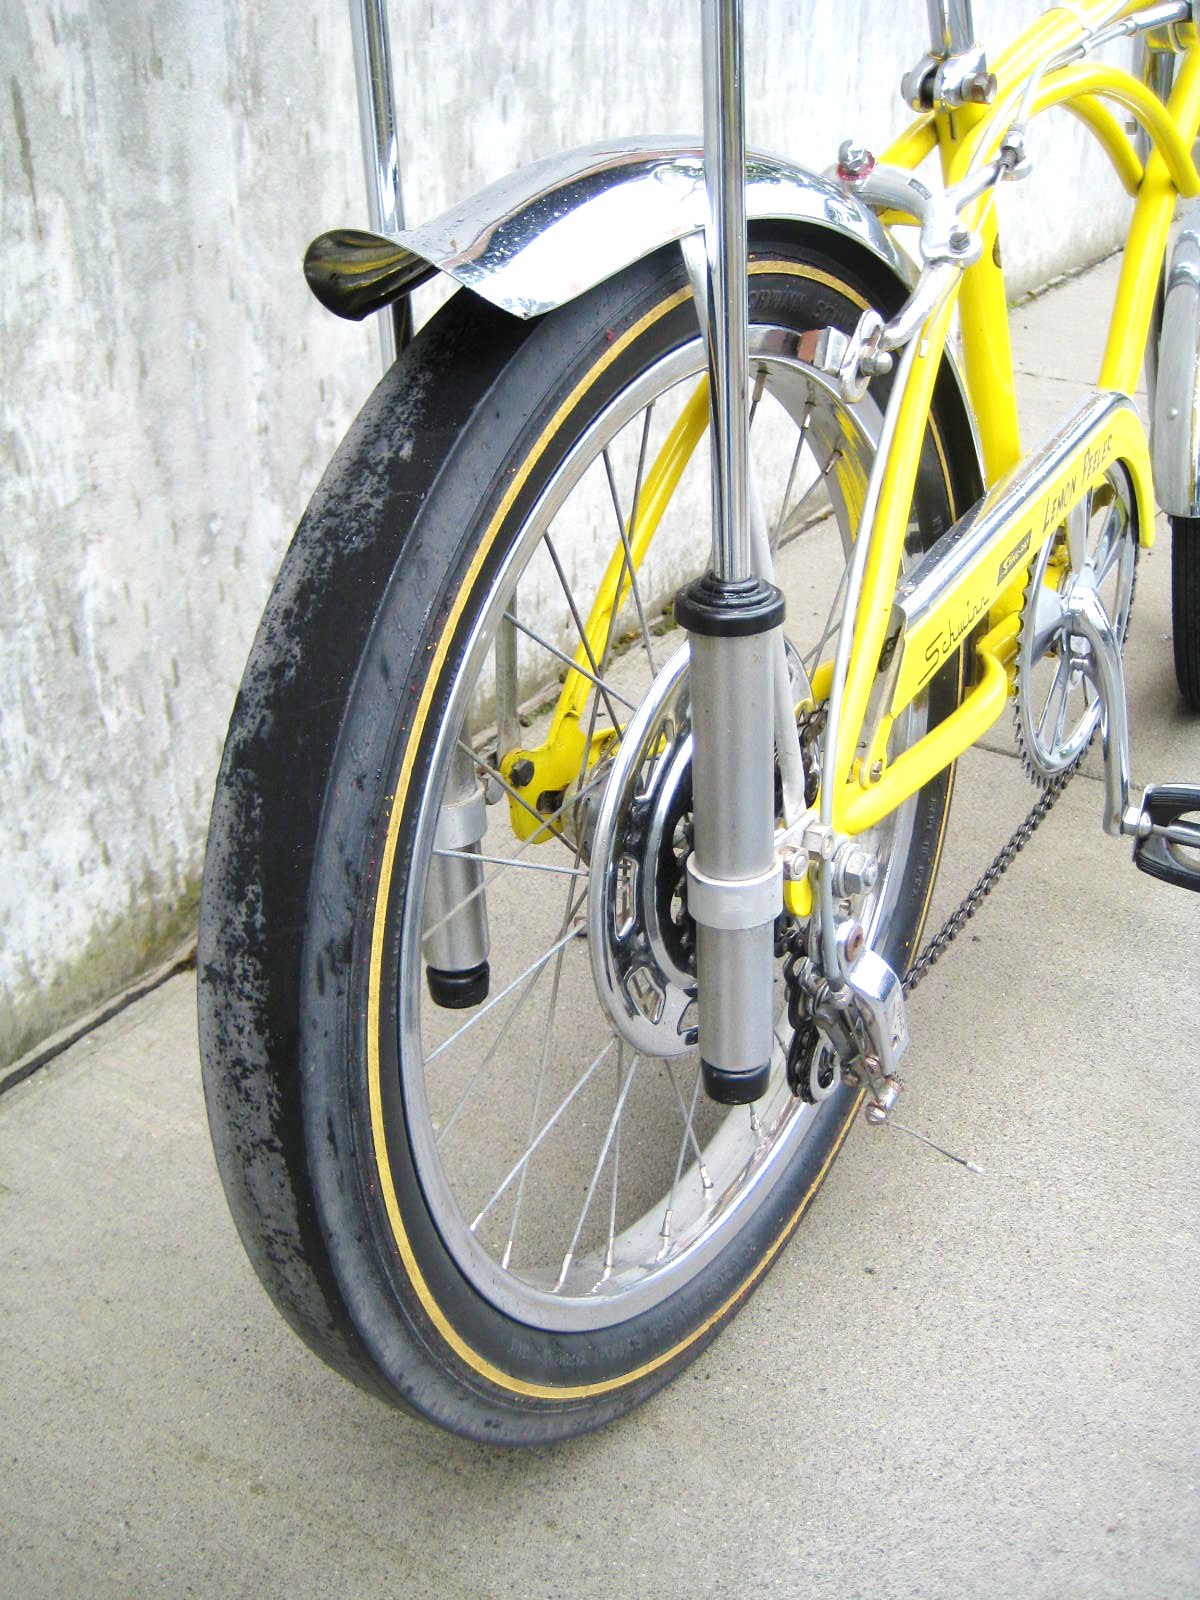 1968 Schwinn Lemon Peeler krate bike at Classic Cycle